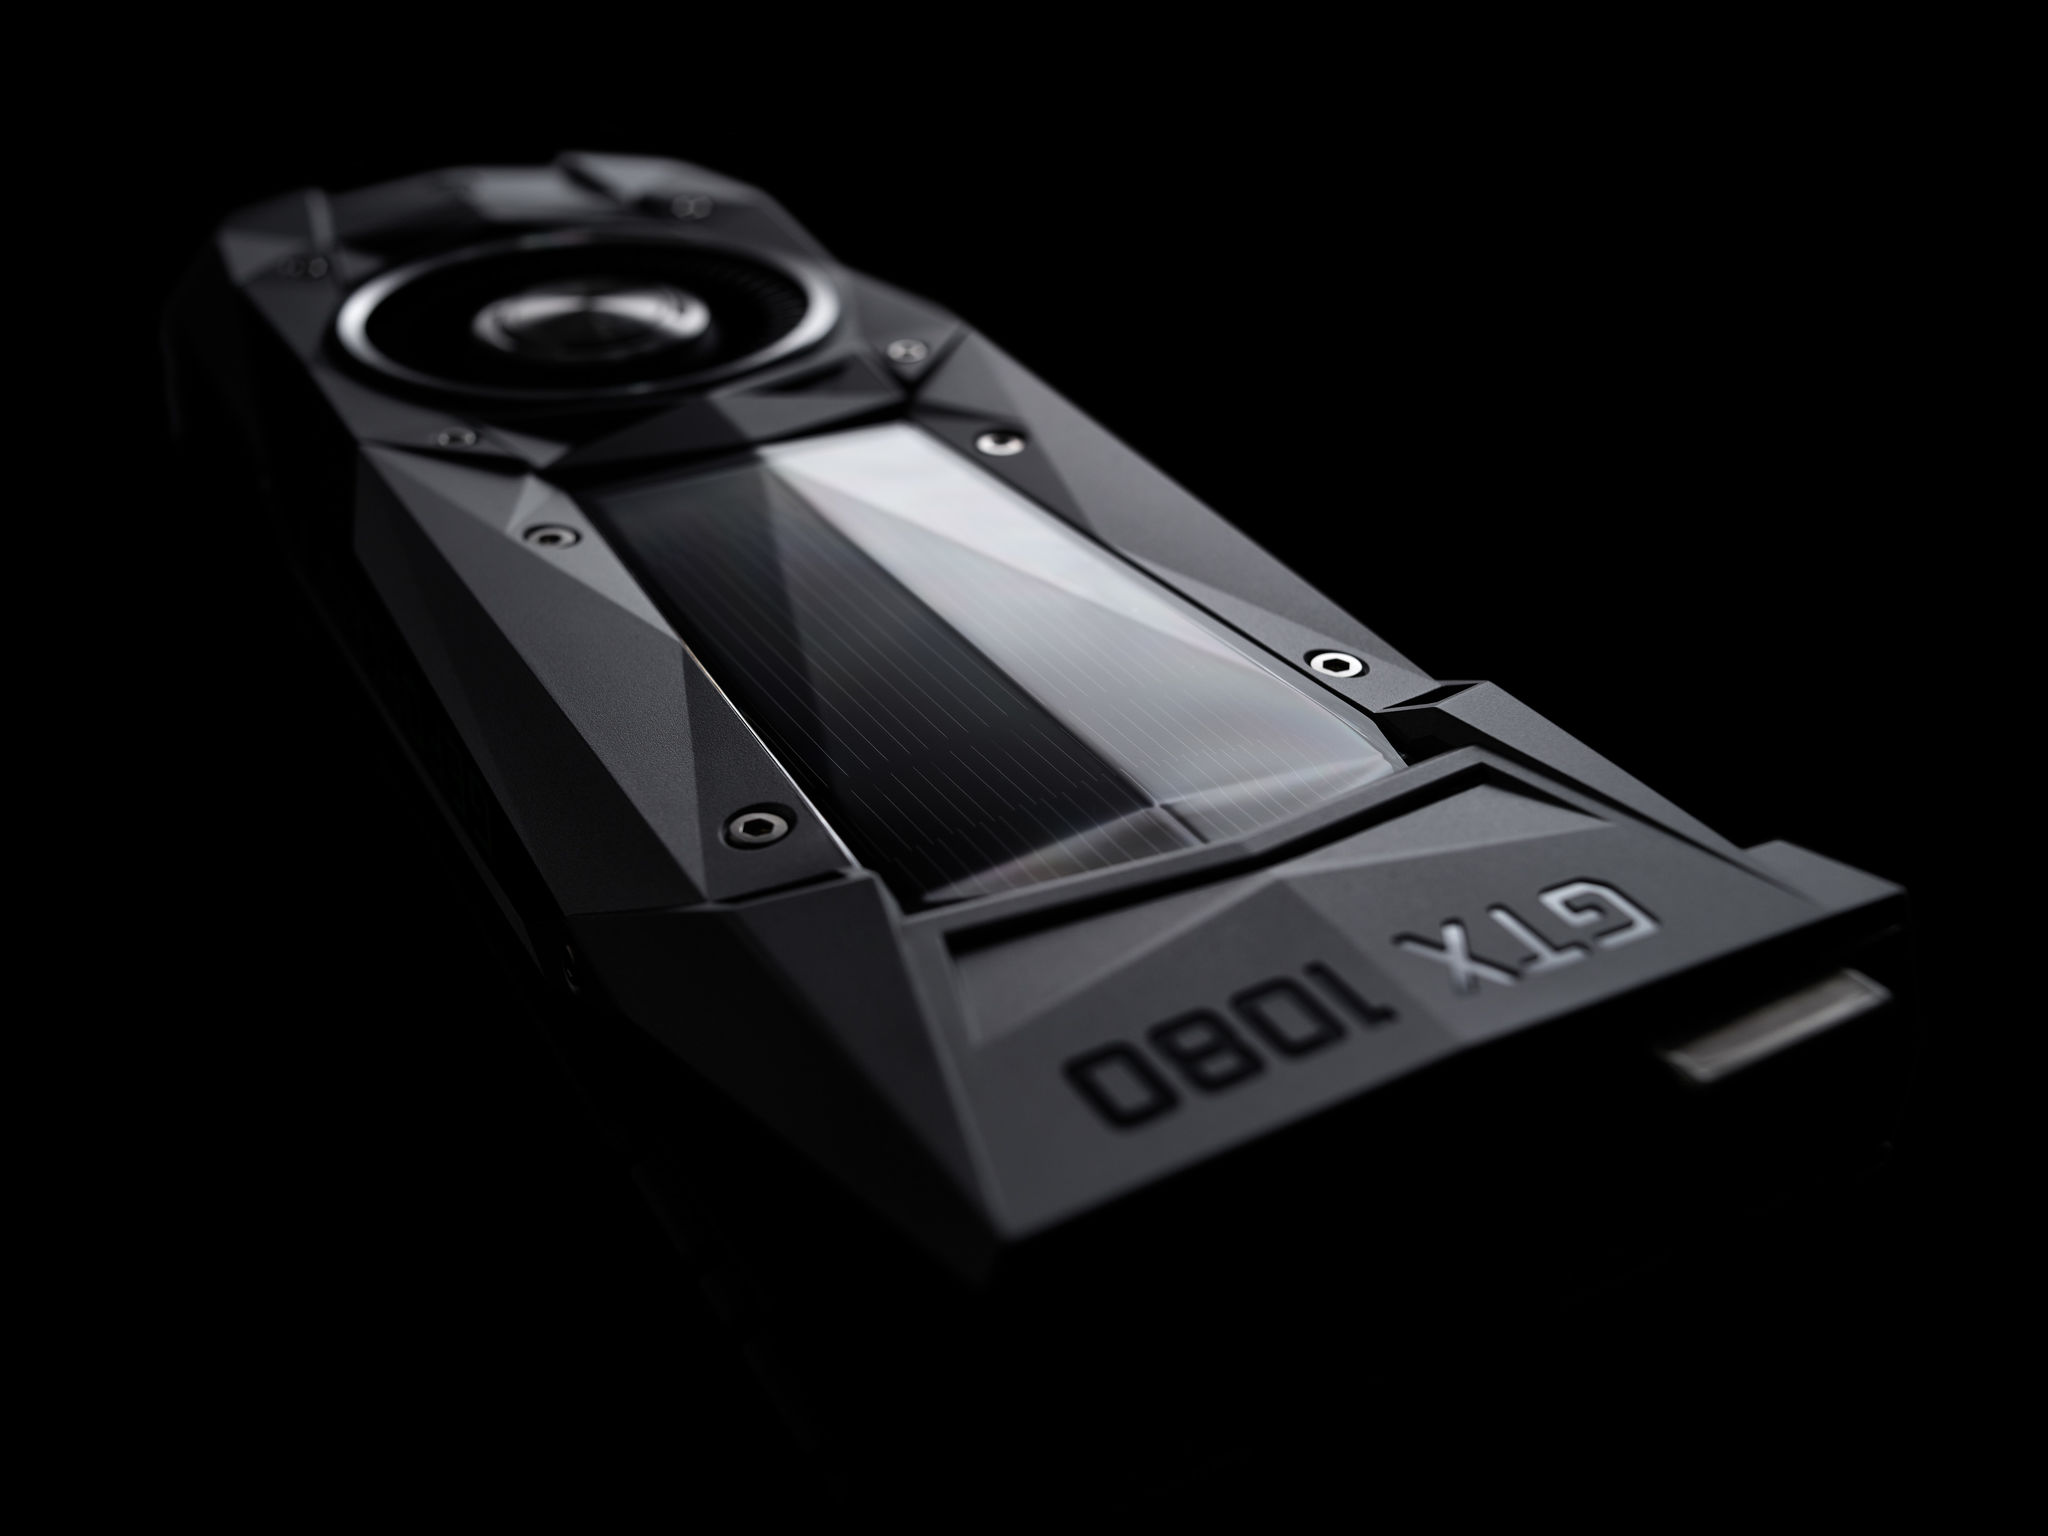 Nvidia GeForce GTX1080